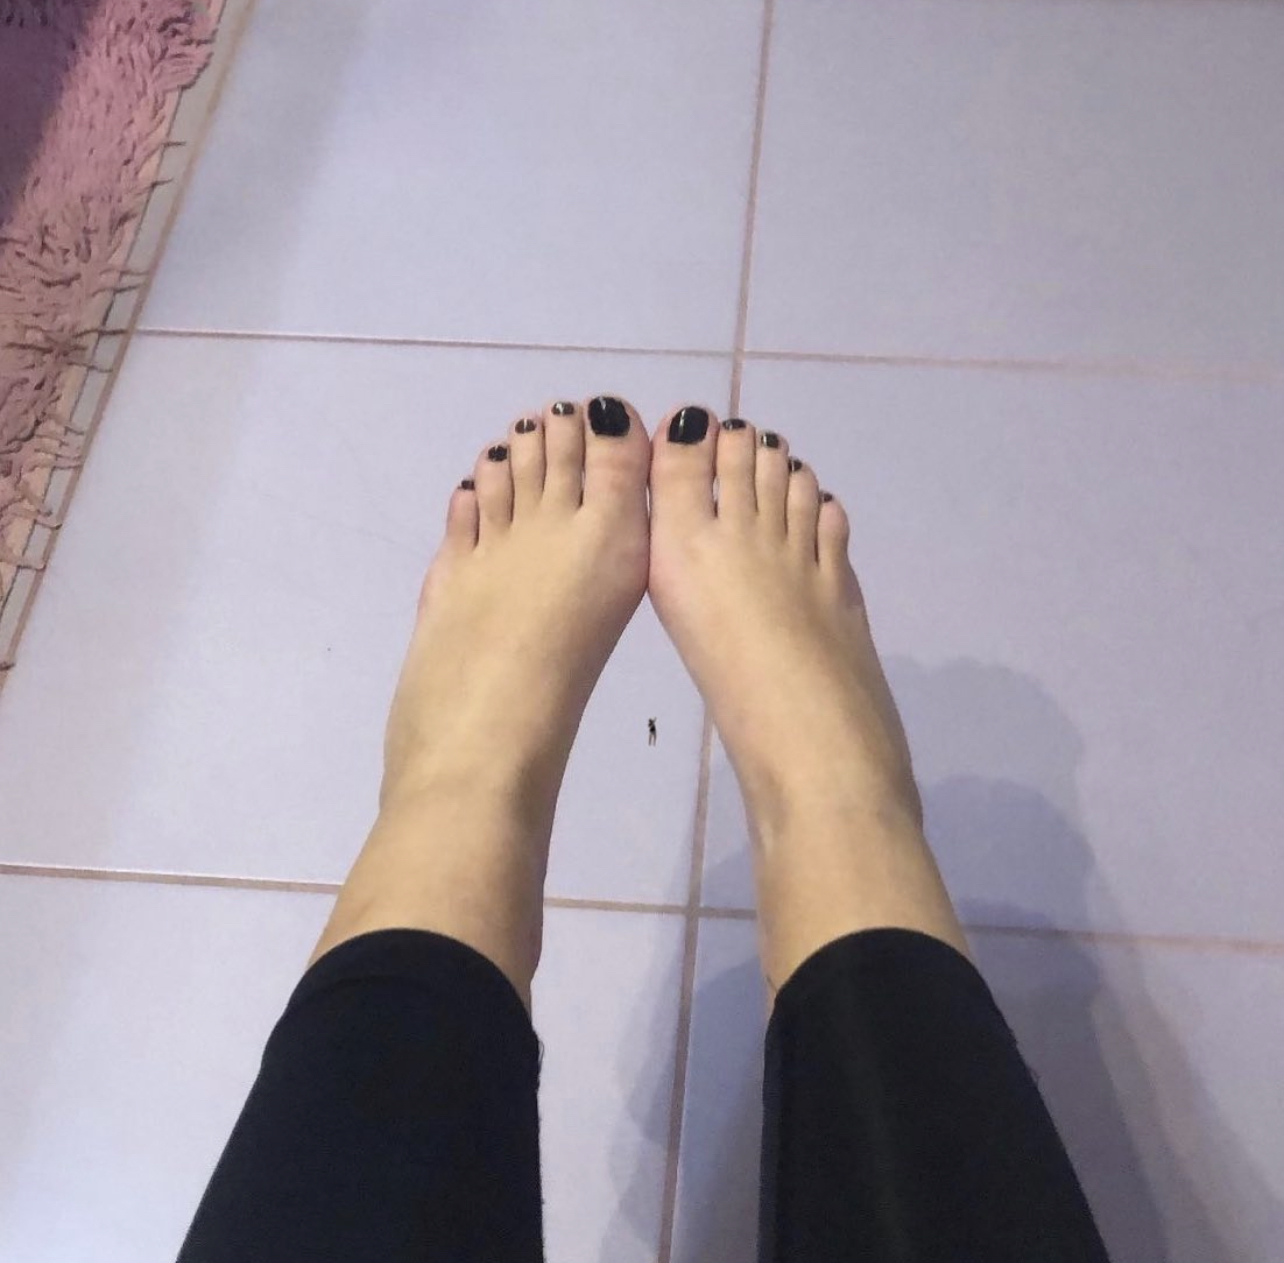 Alexa Demie Feet